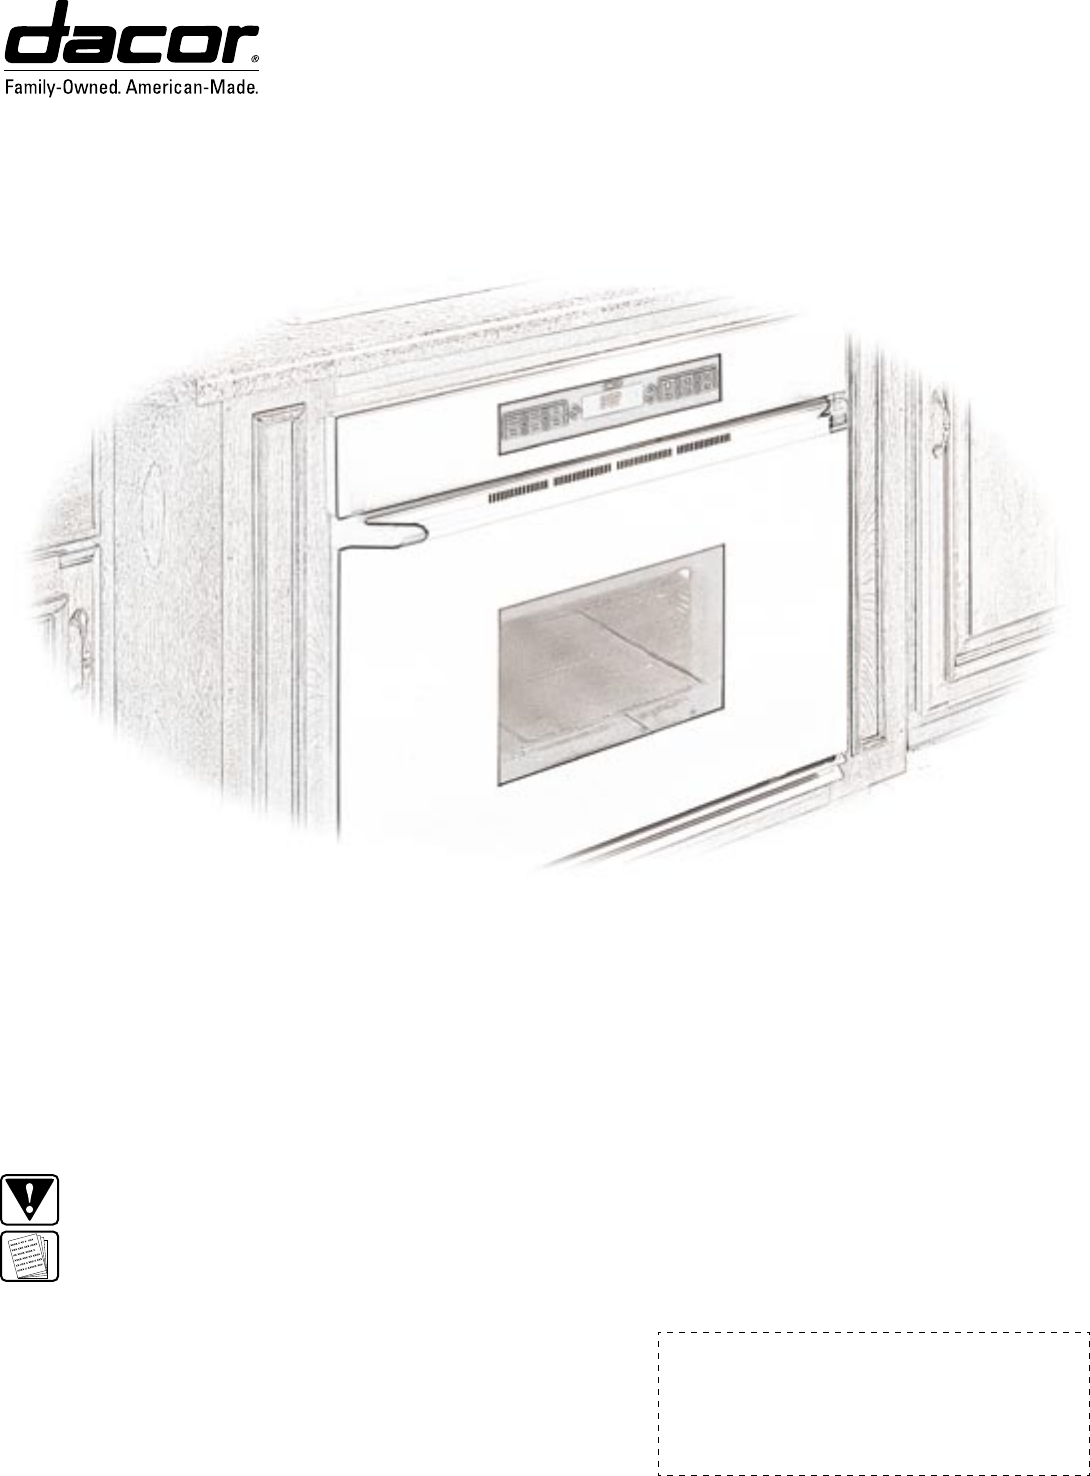 Dacor wall oven user manual